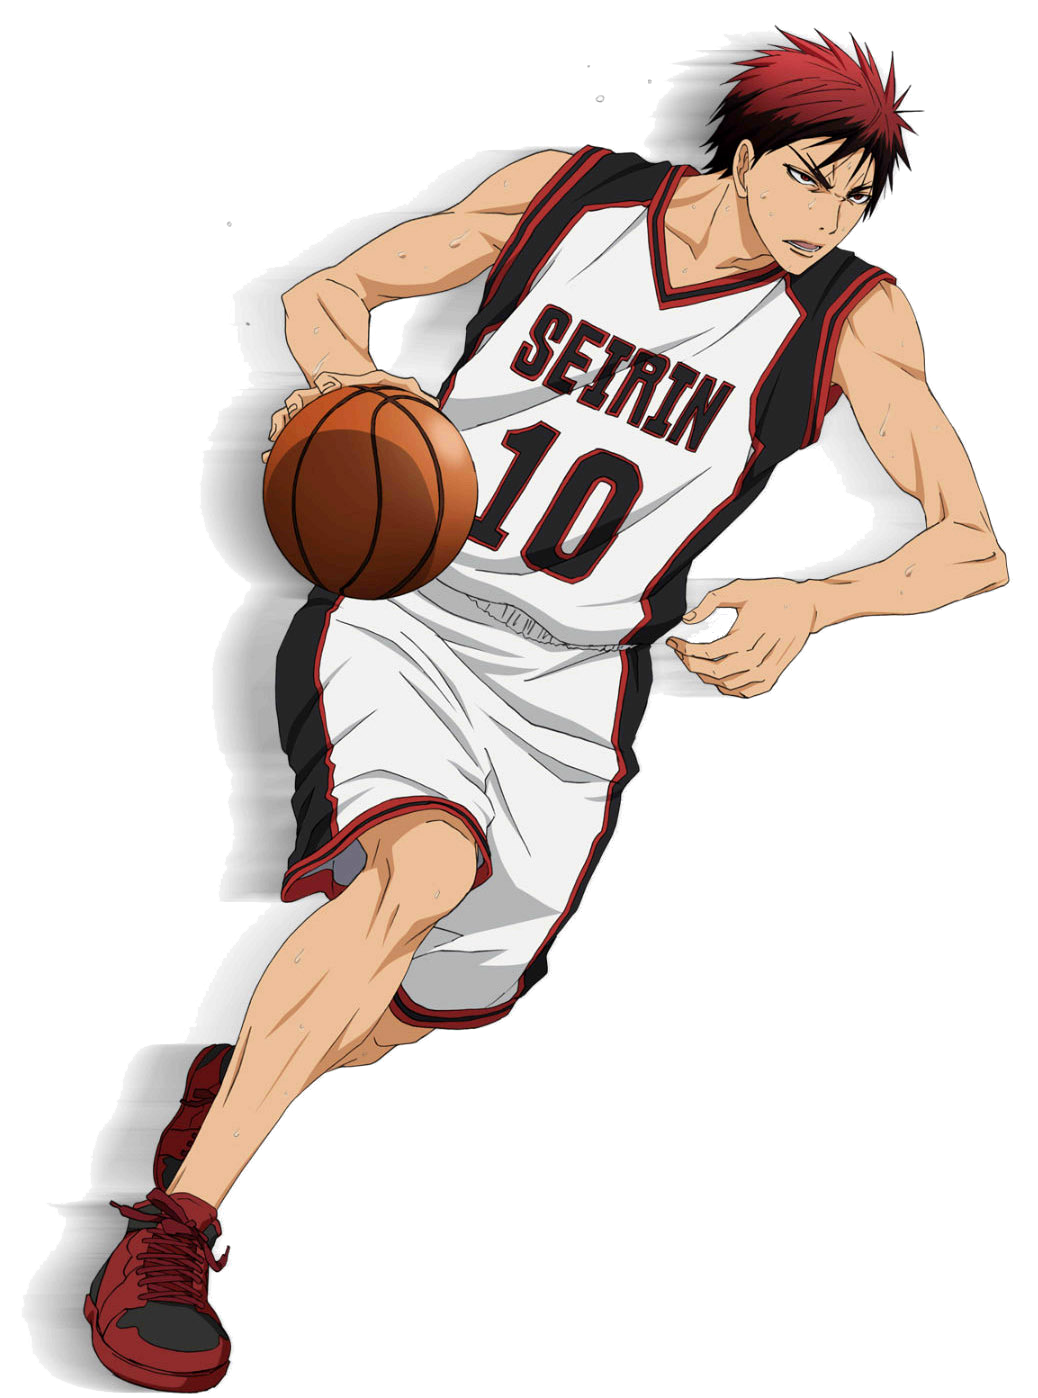 kagakuro  Kuroko, Kuroko no basket, Anime